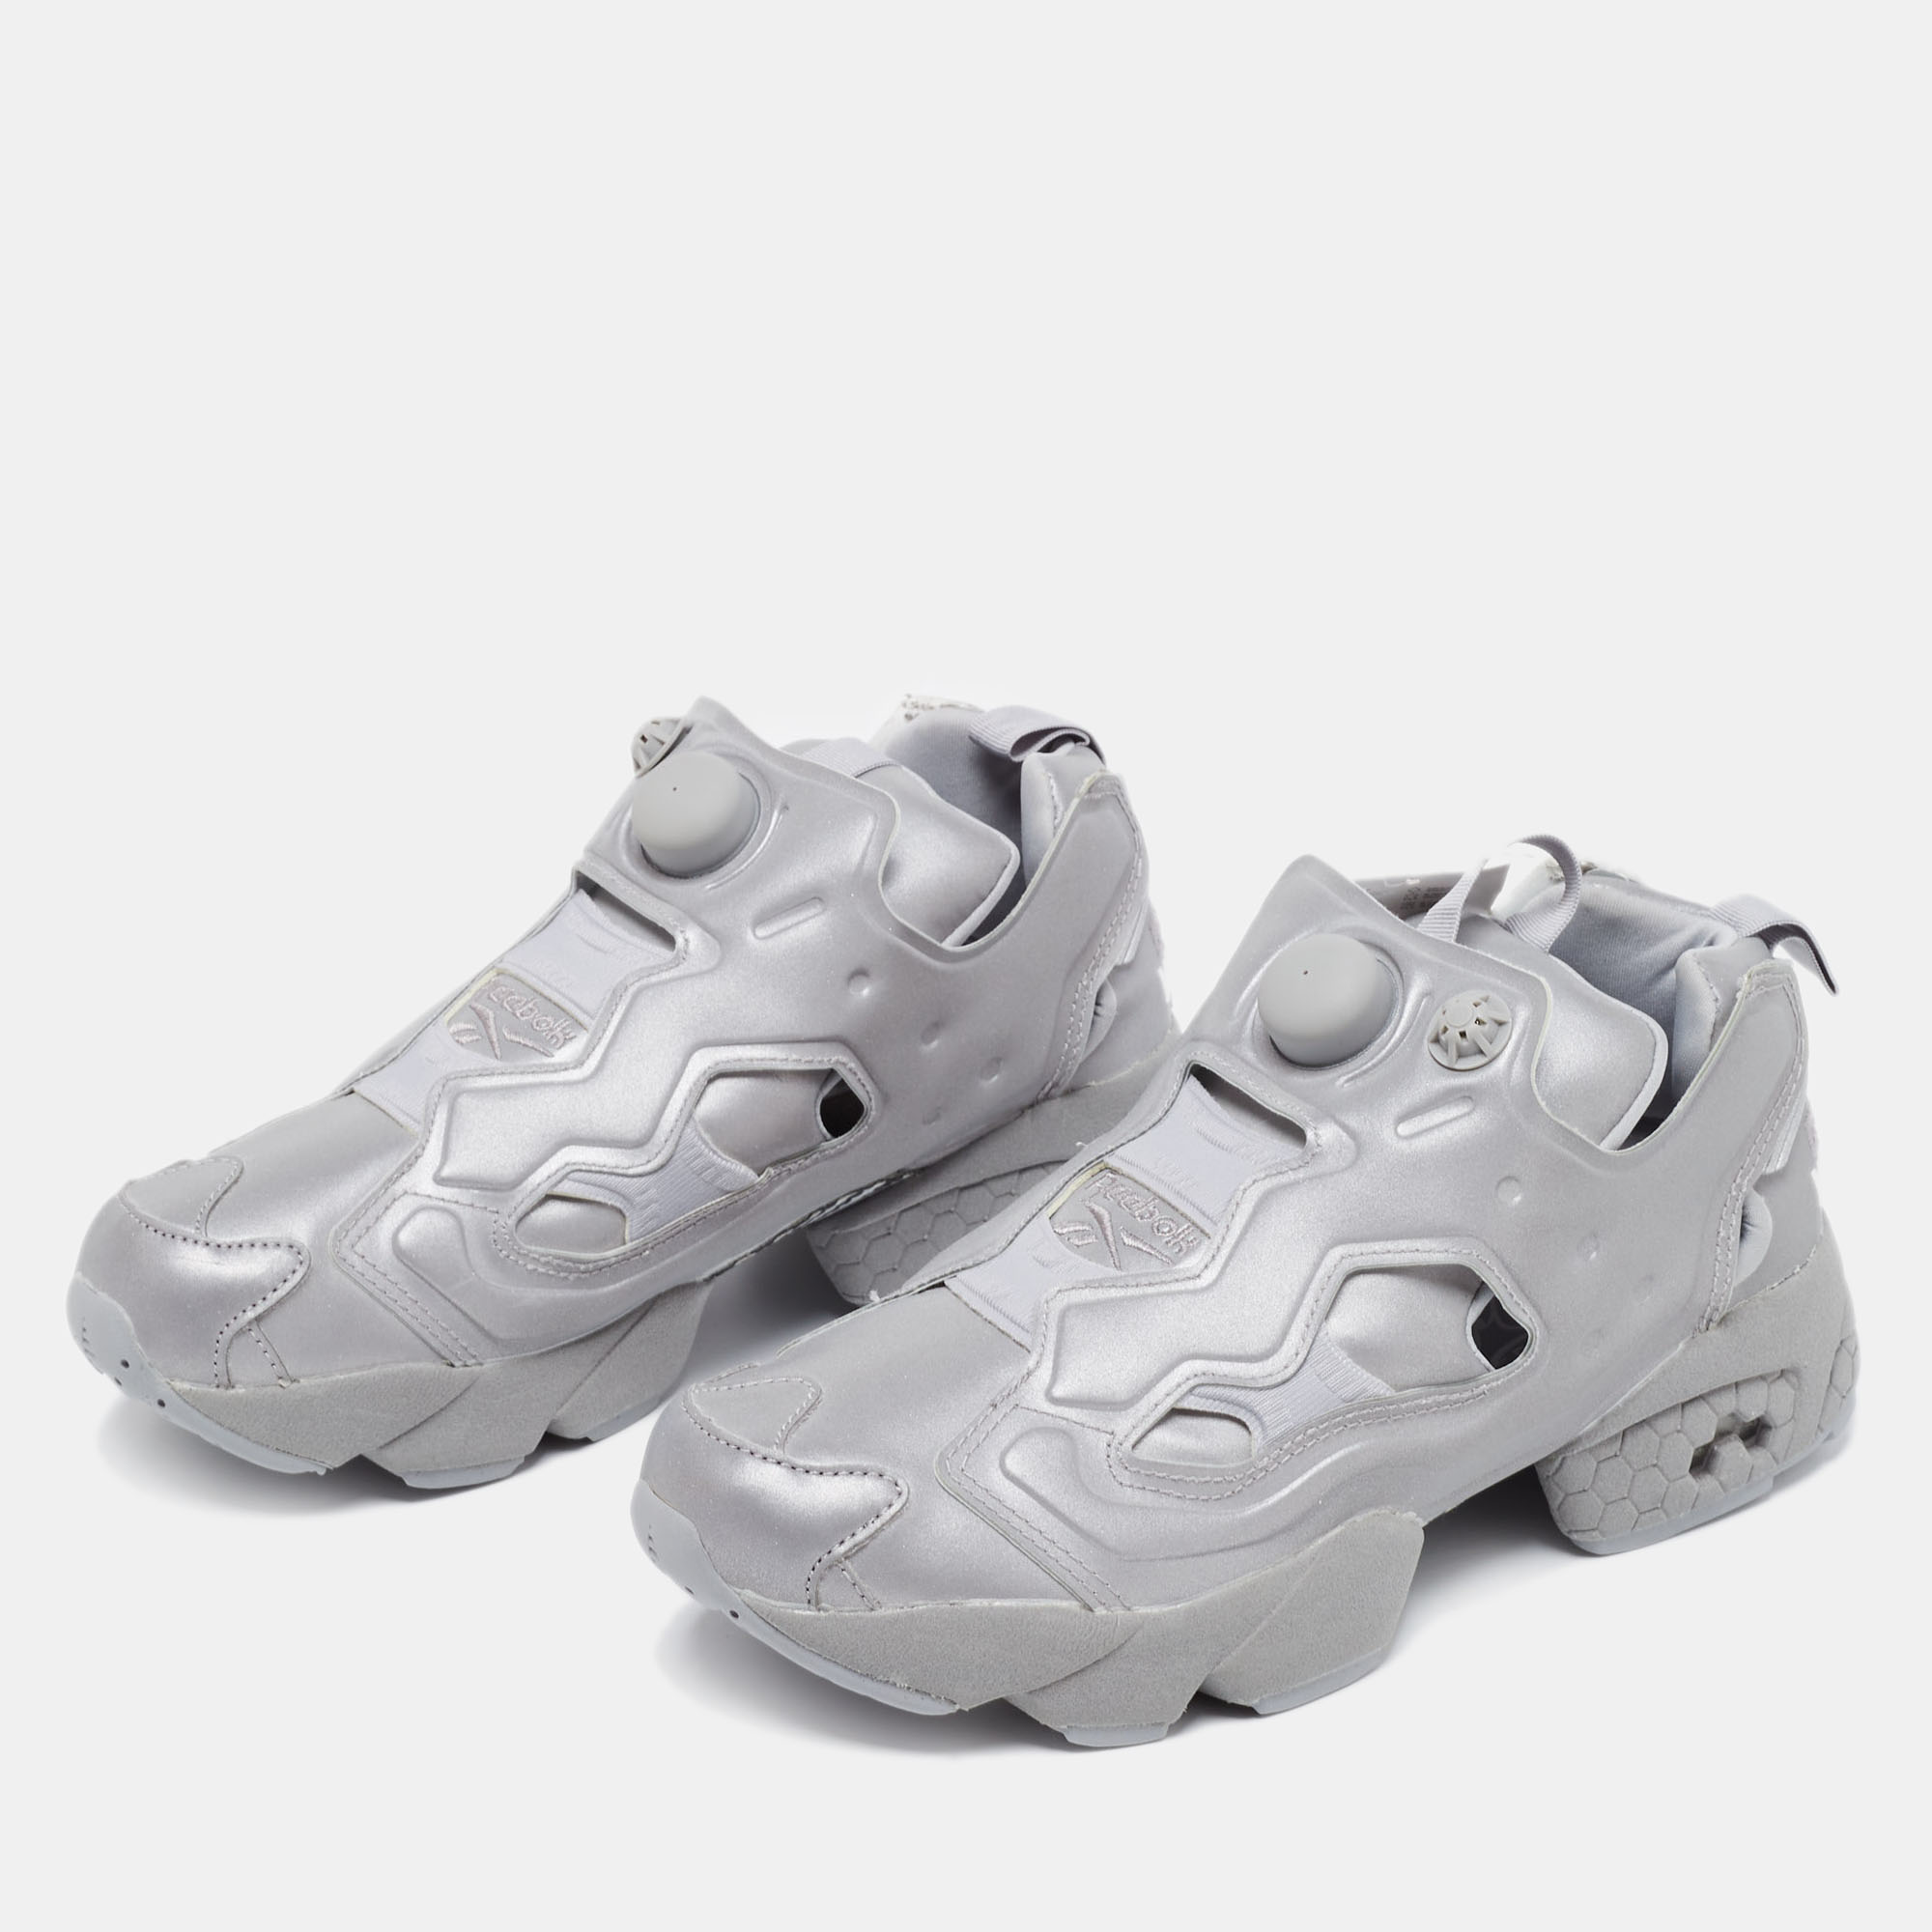 

Vetements x Reebok Reflective Grey Leather Instapump Fury Low-Top Sneakers Size